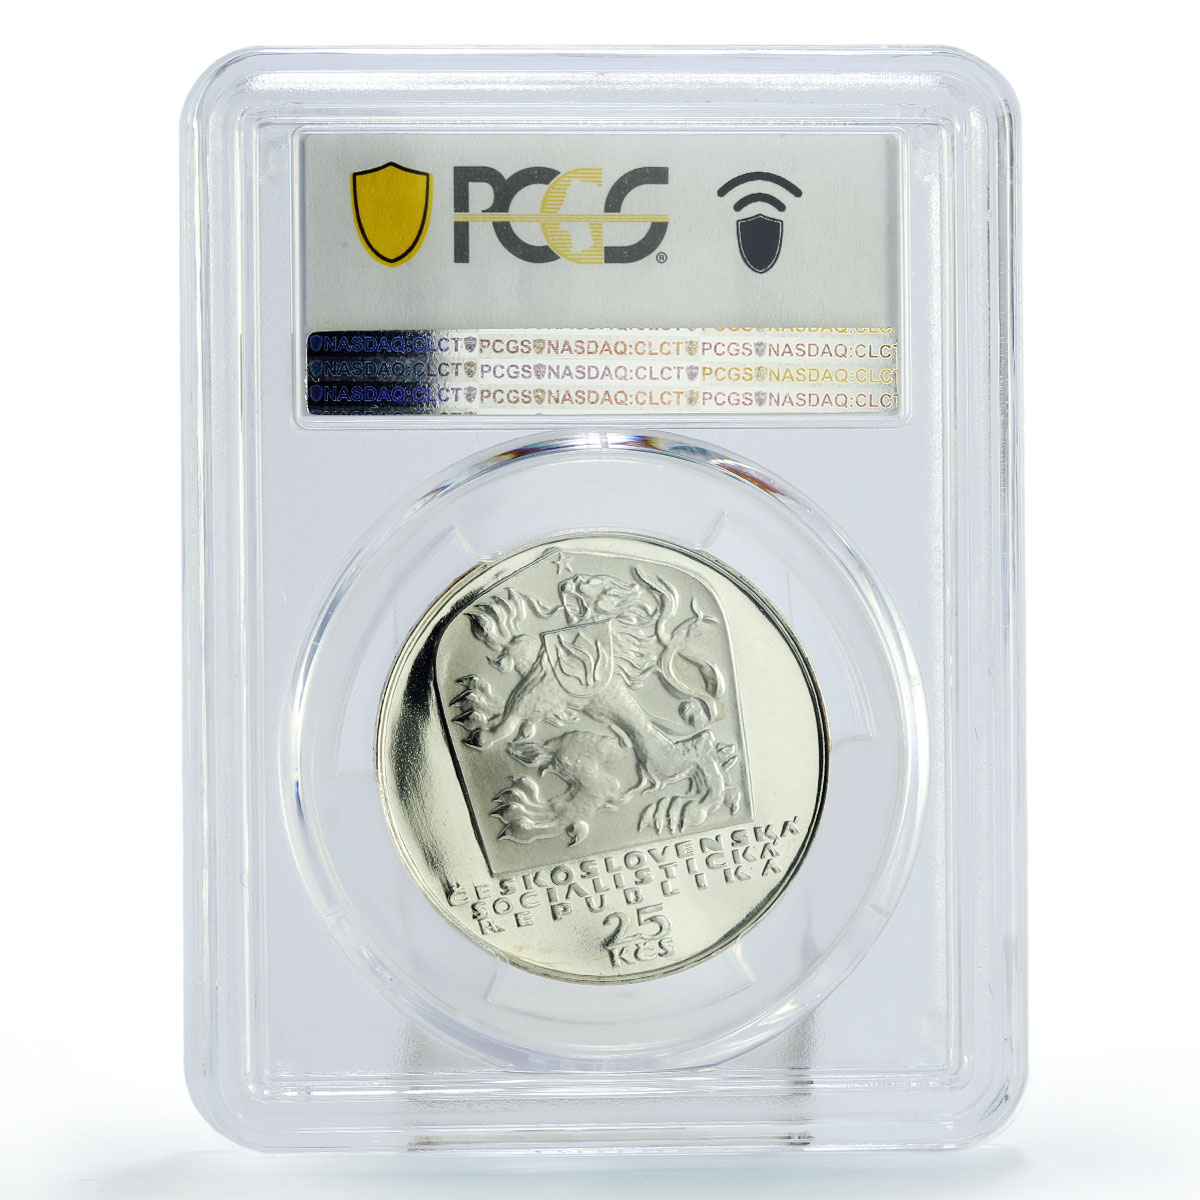 Czechoslovakia 25 korun 25 Years of Slovak Uprising PR69 PCGS silver coin 1969